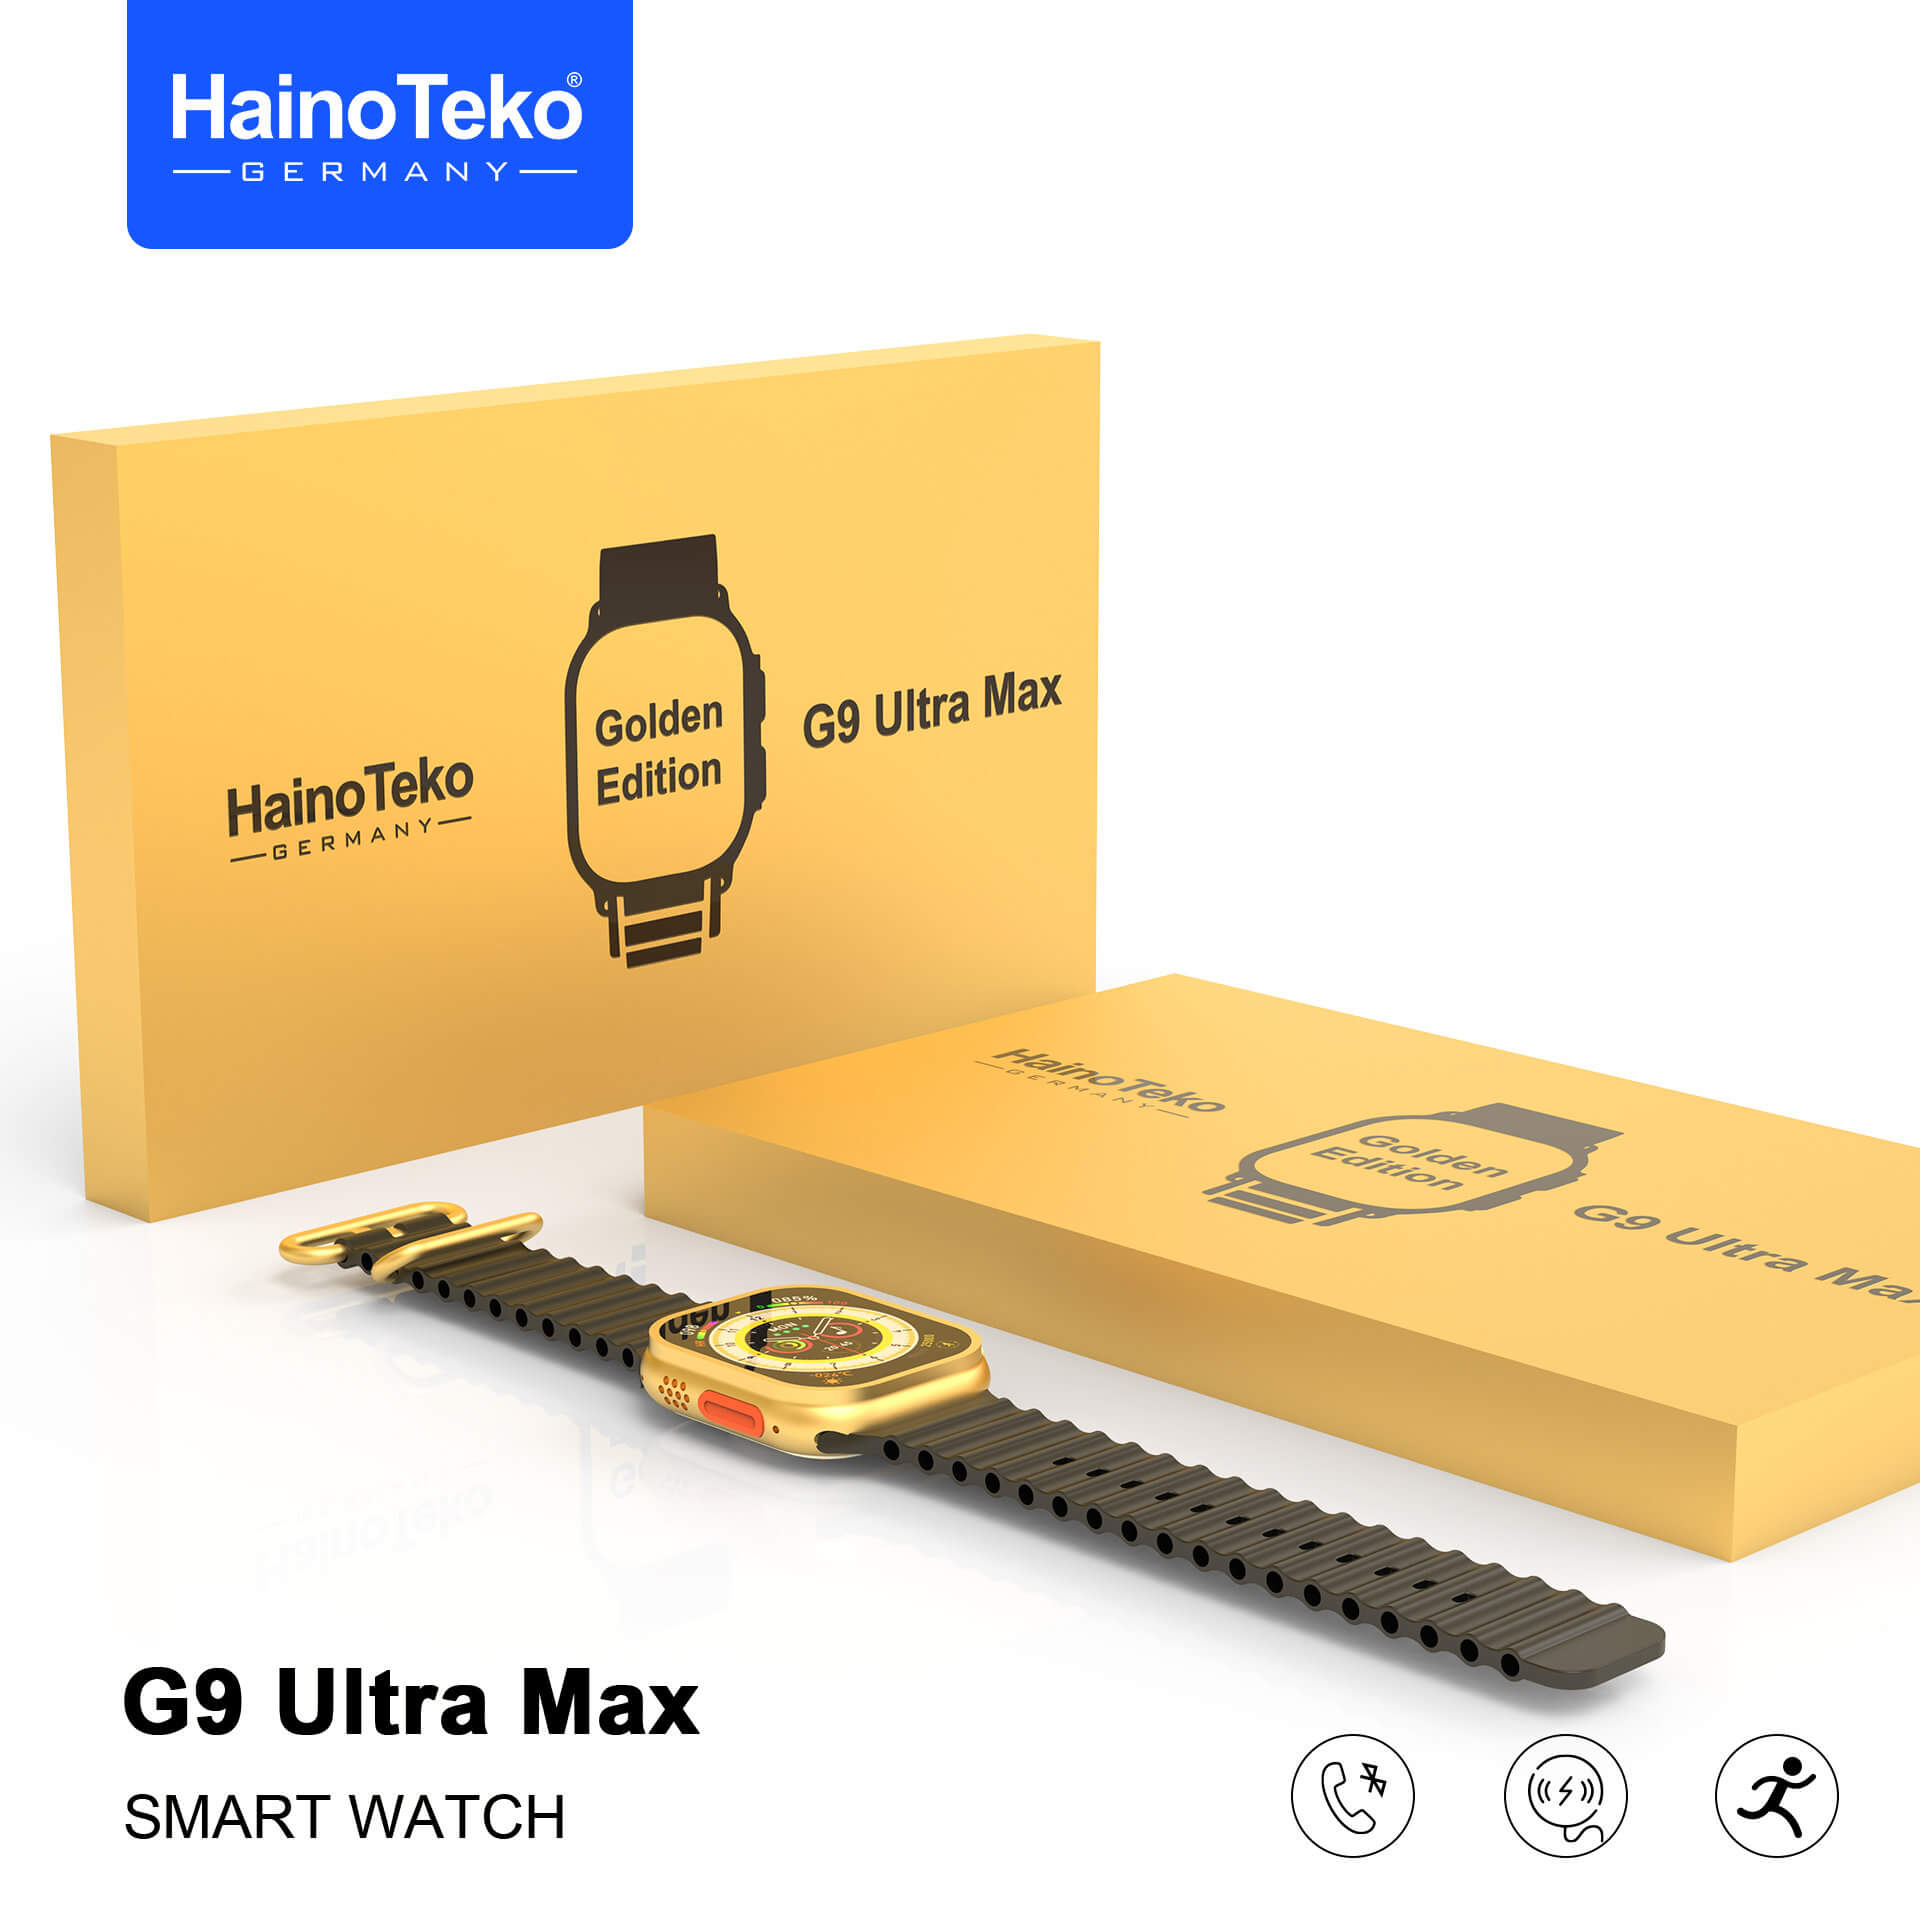 G9 ultra max heino teko smart watch